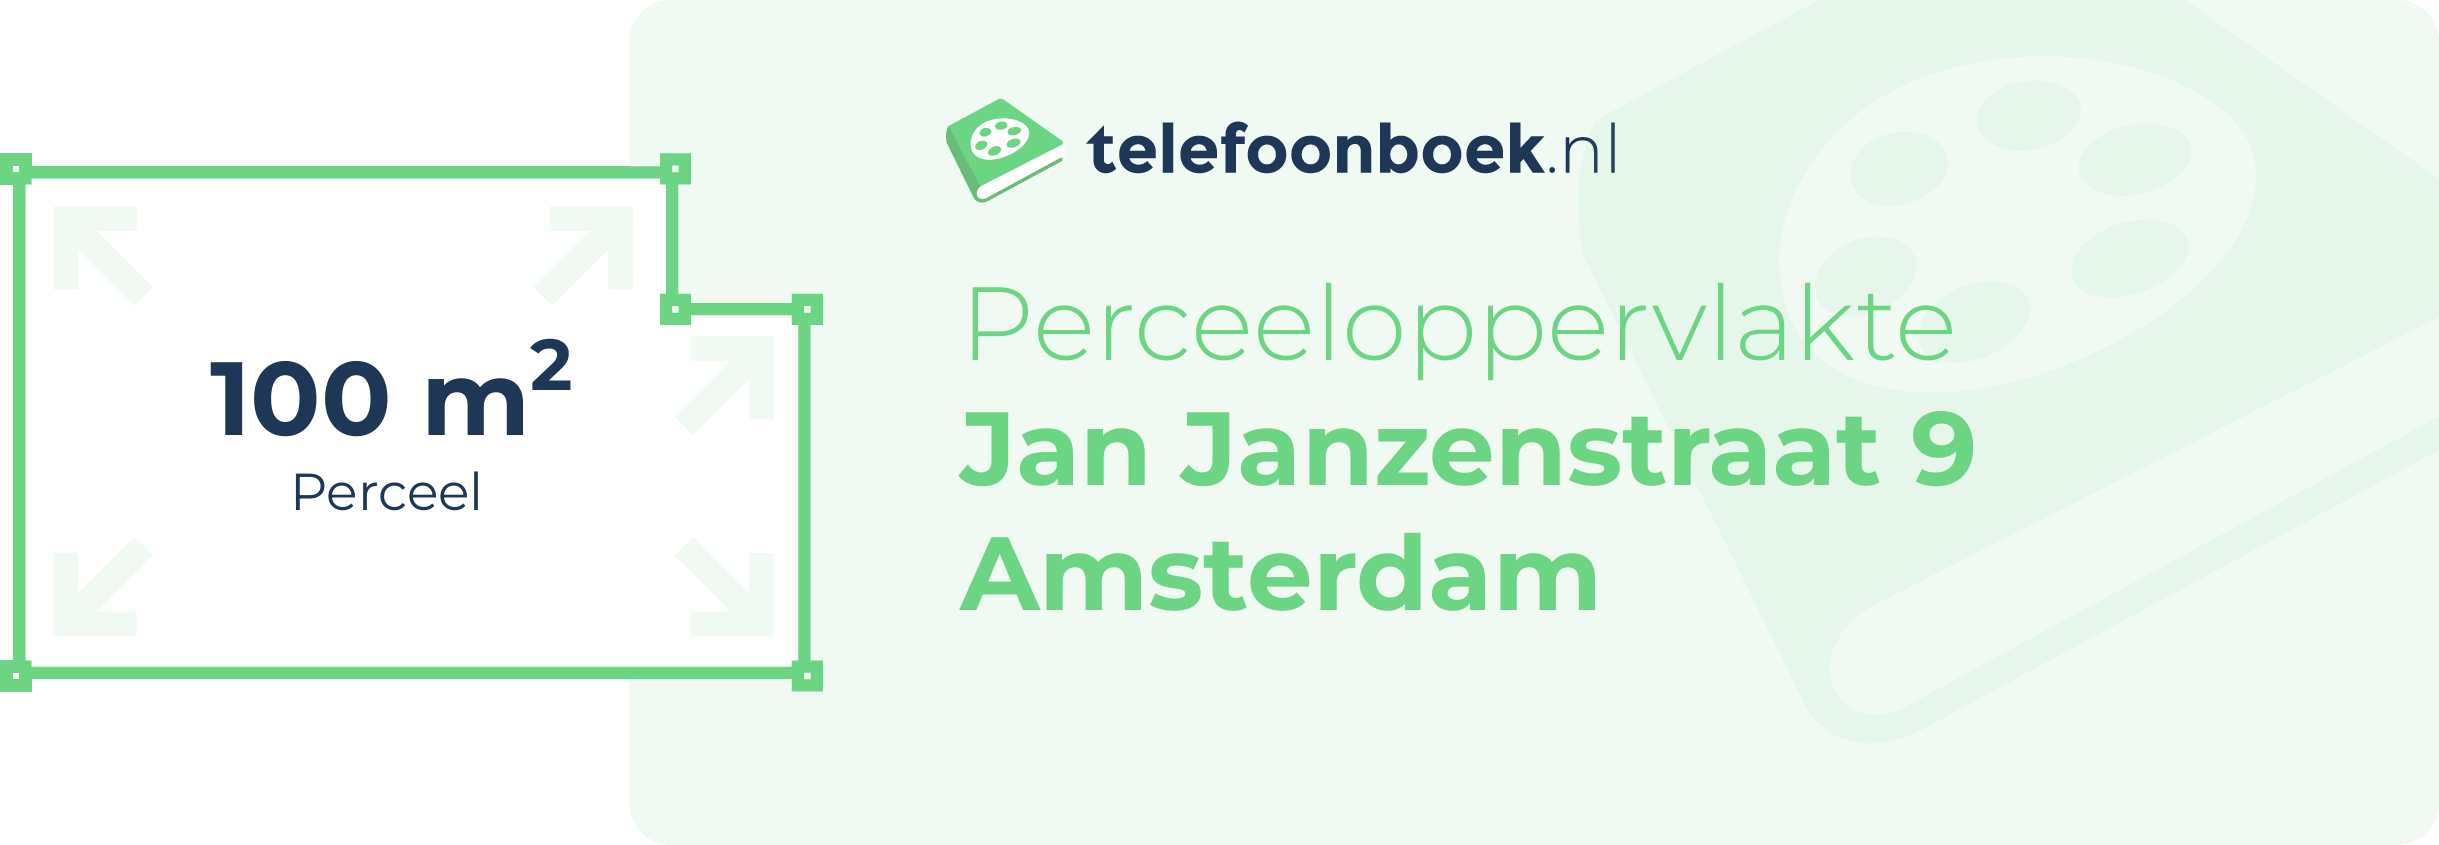 Perceeloppervlakte Jan Janzenstraat 9 Amsterdam